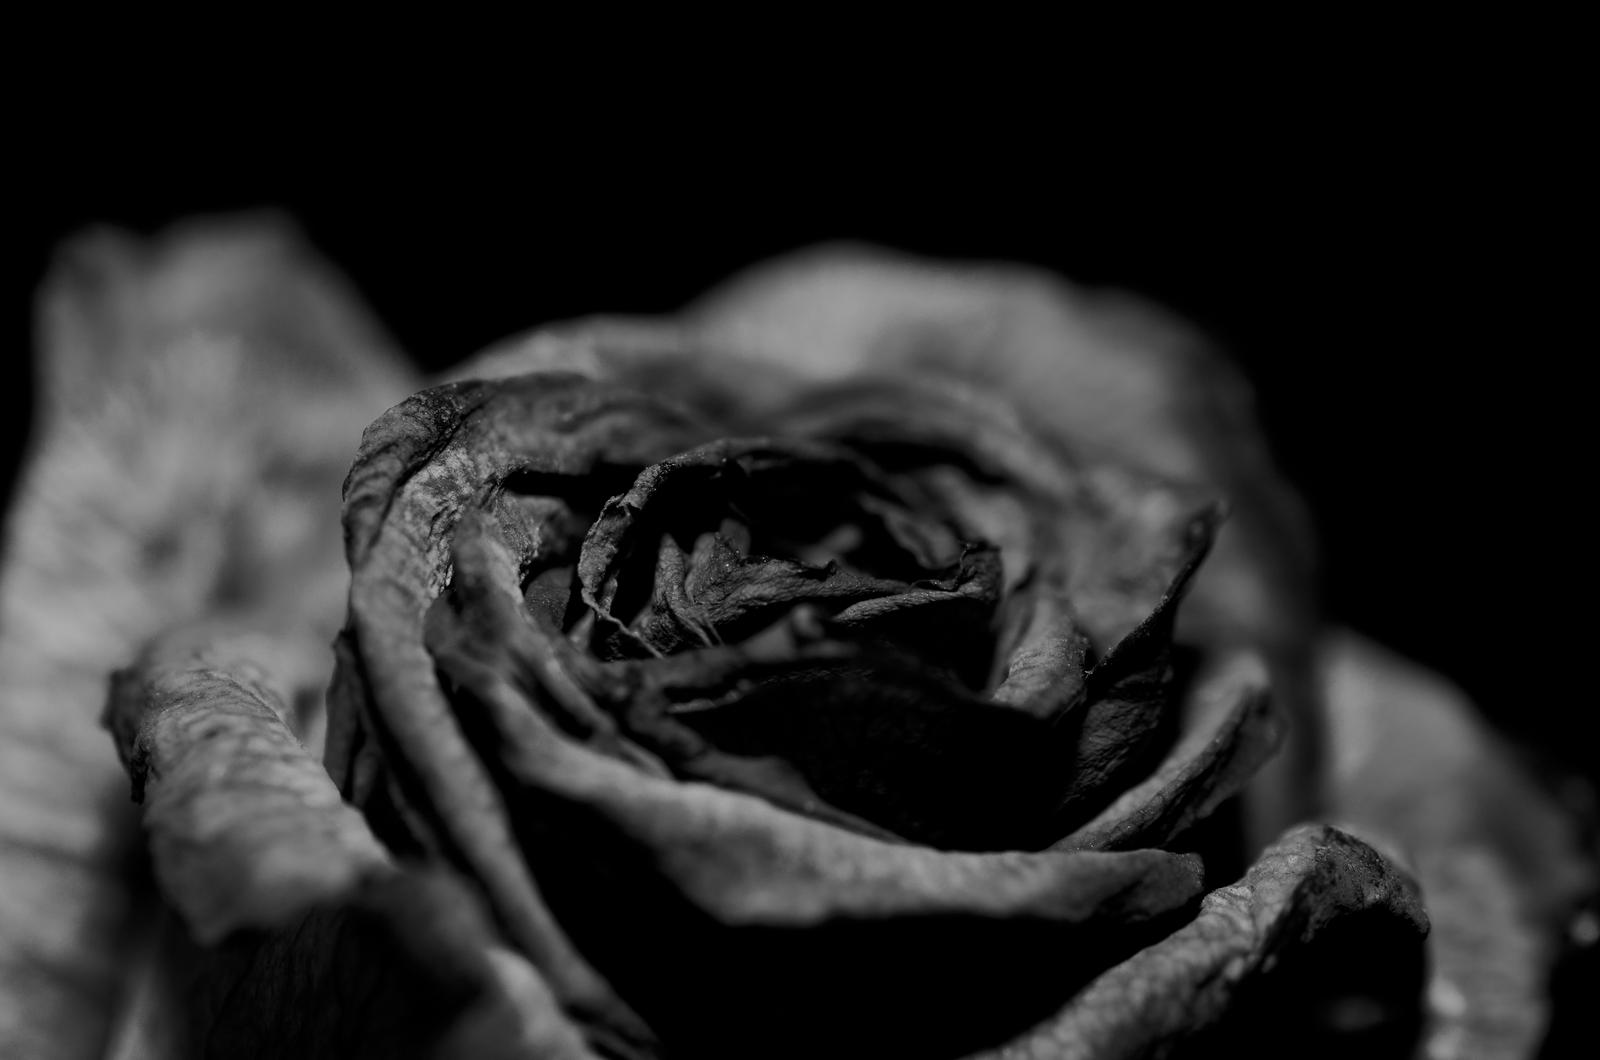 Black Roses Wallpaper Tumblr